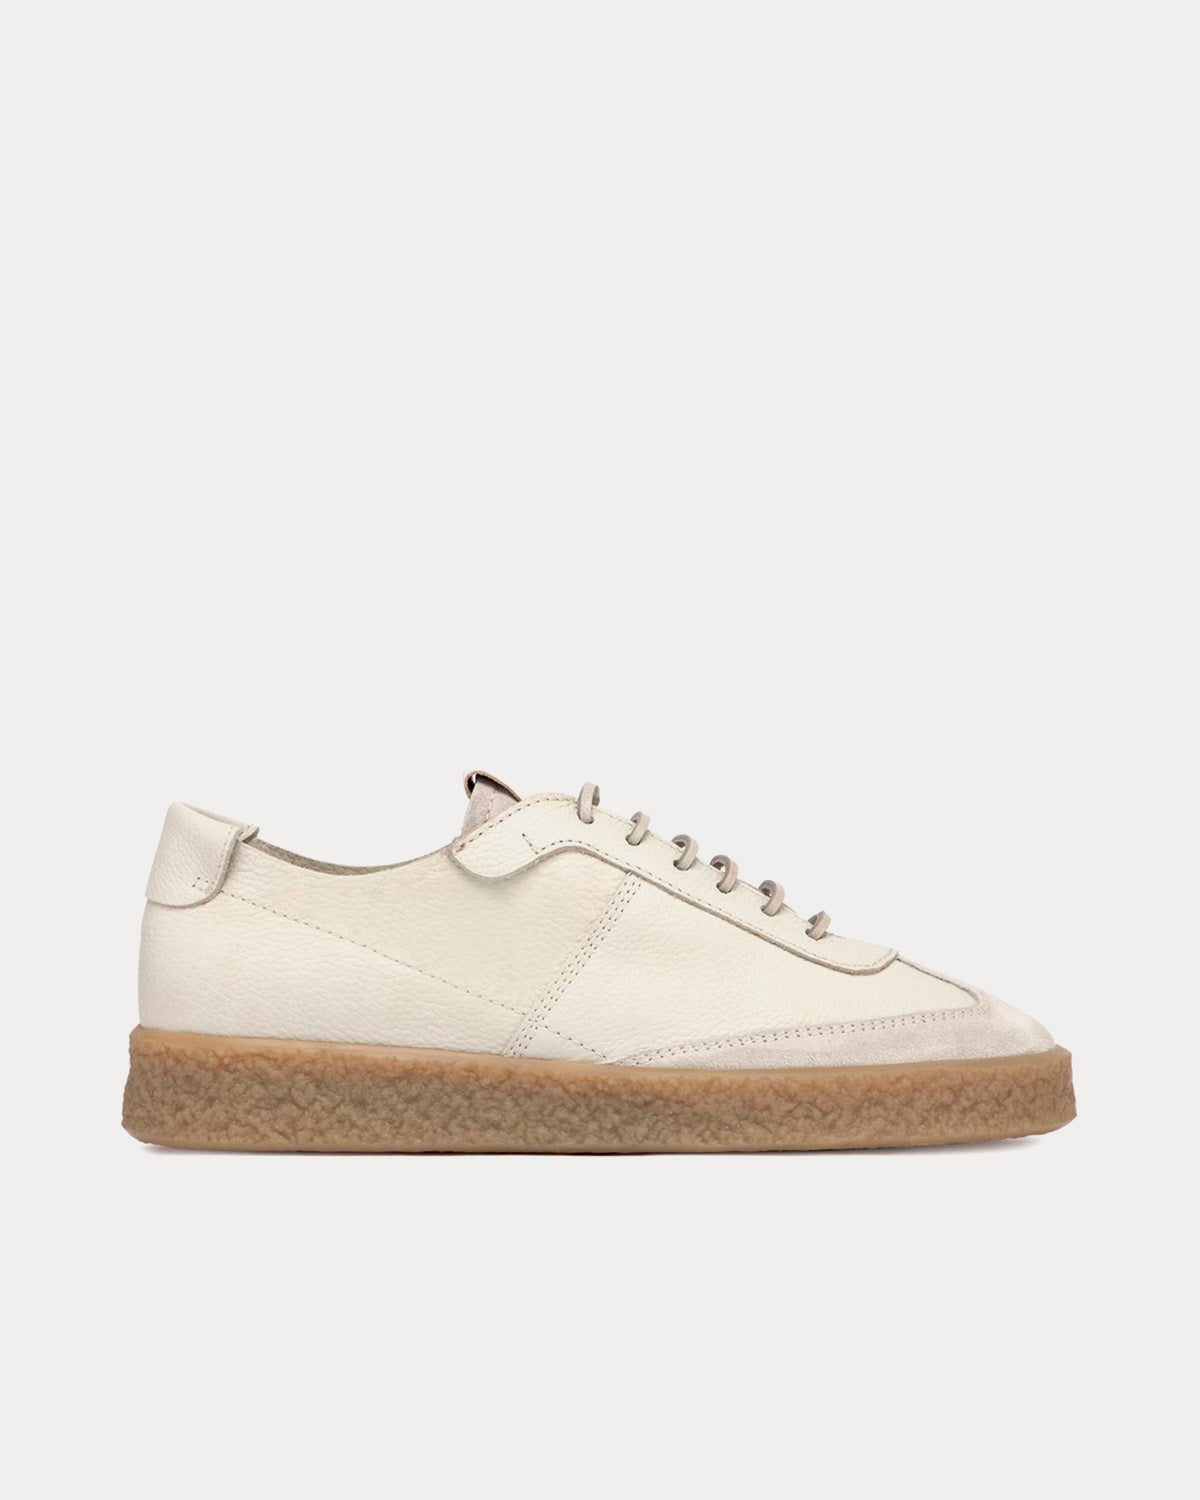 Buttero - Crespo Leather White Low Top Sneakers